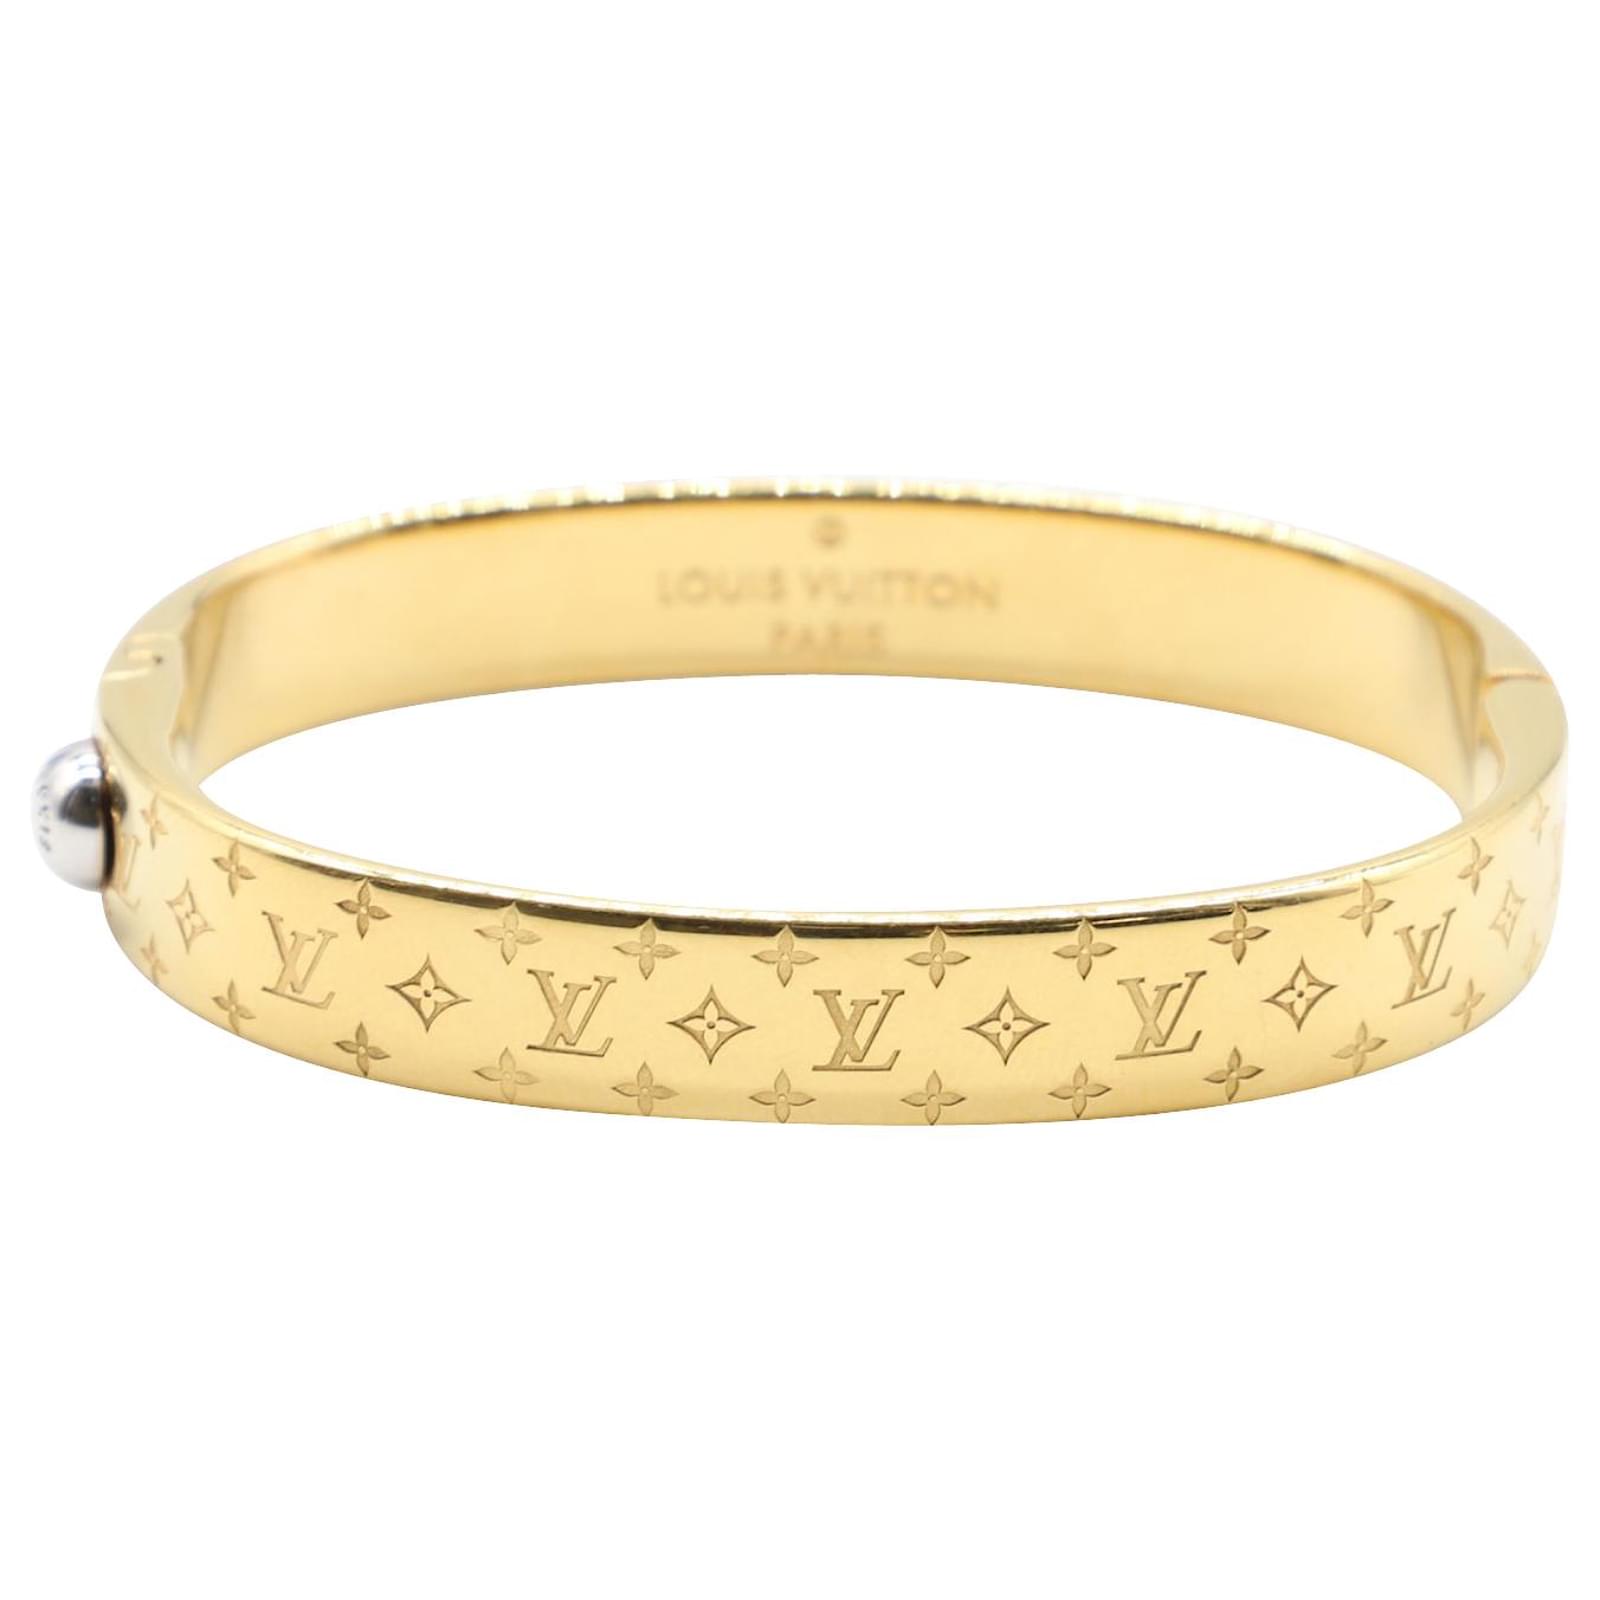 Louis Vuitton 'Nanogram Cuff' Bracelet